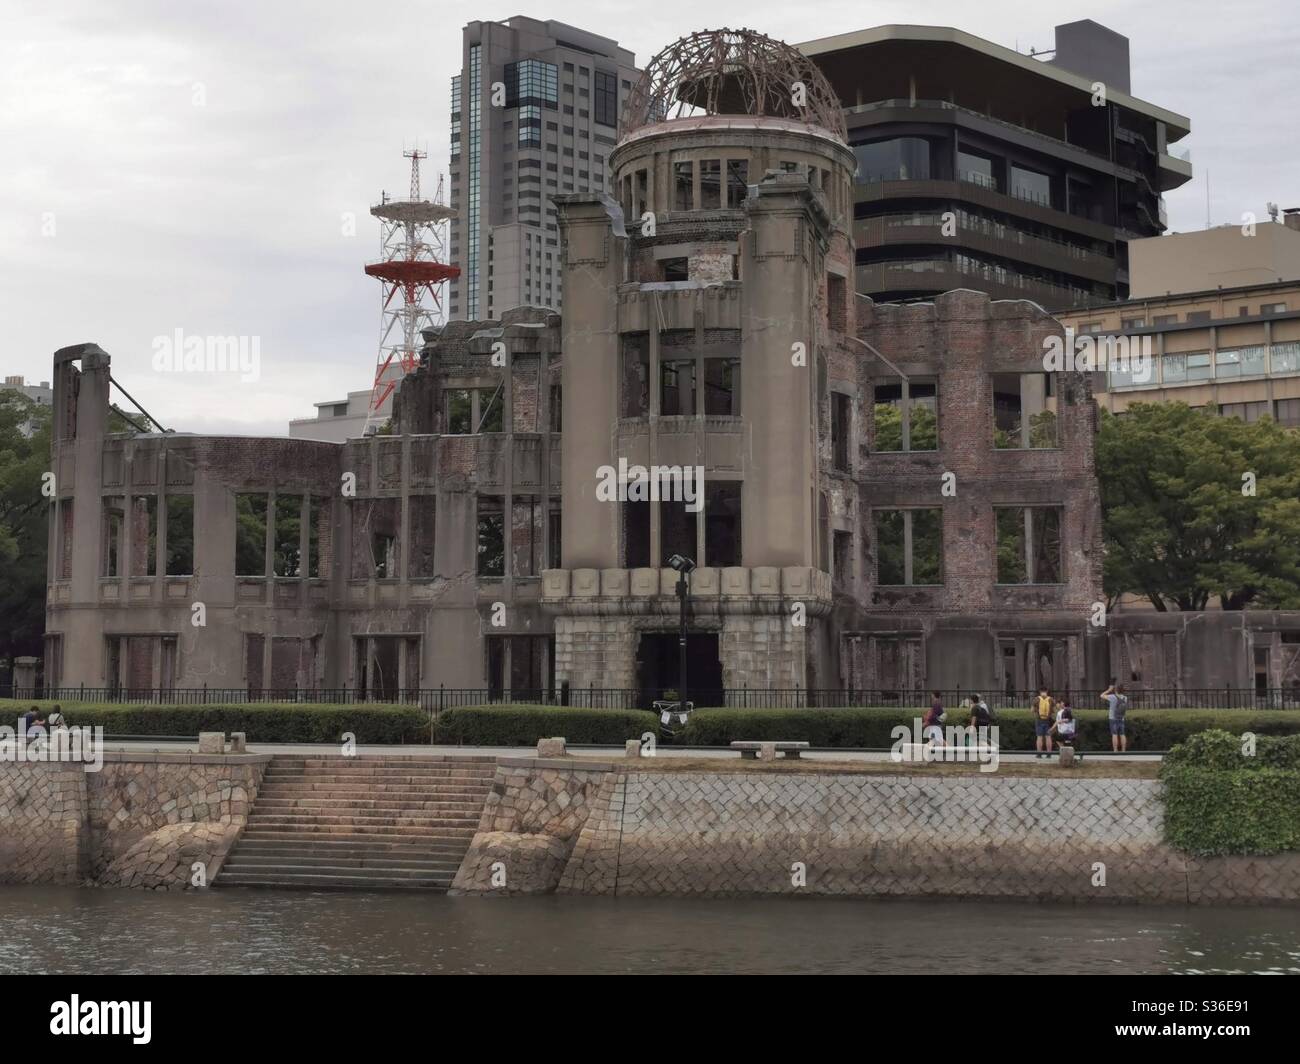 Bomba atomica Hiroshima cupola Foto Stock